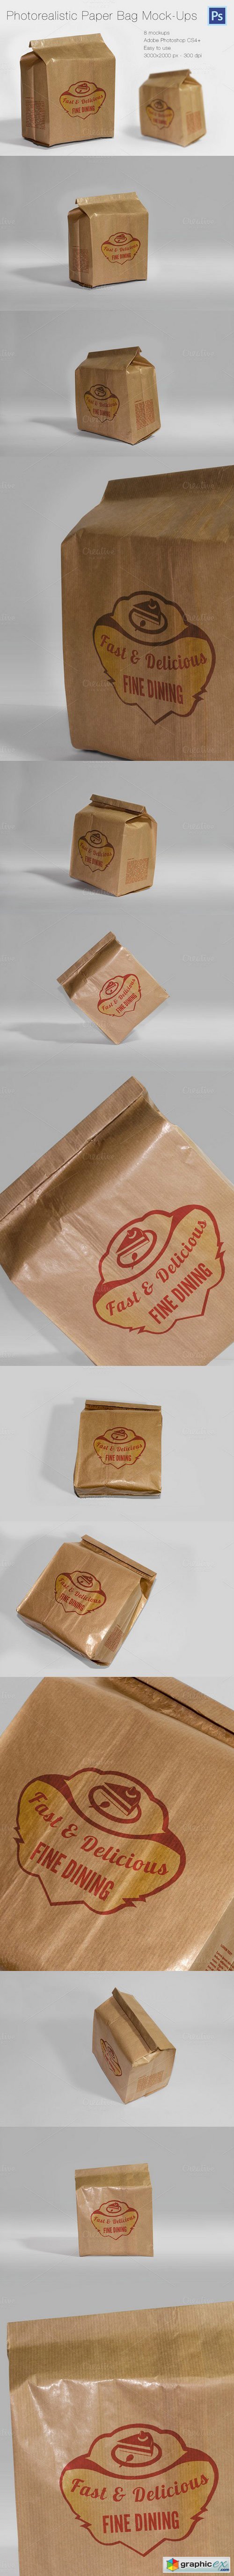 Photorealistic Paper Bag Mock-Ups